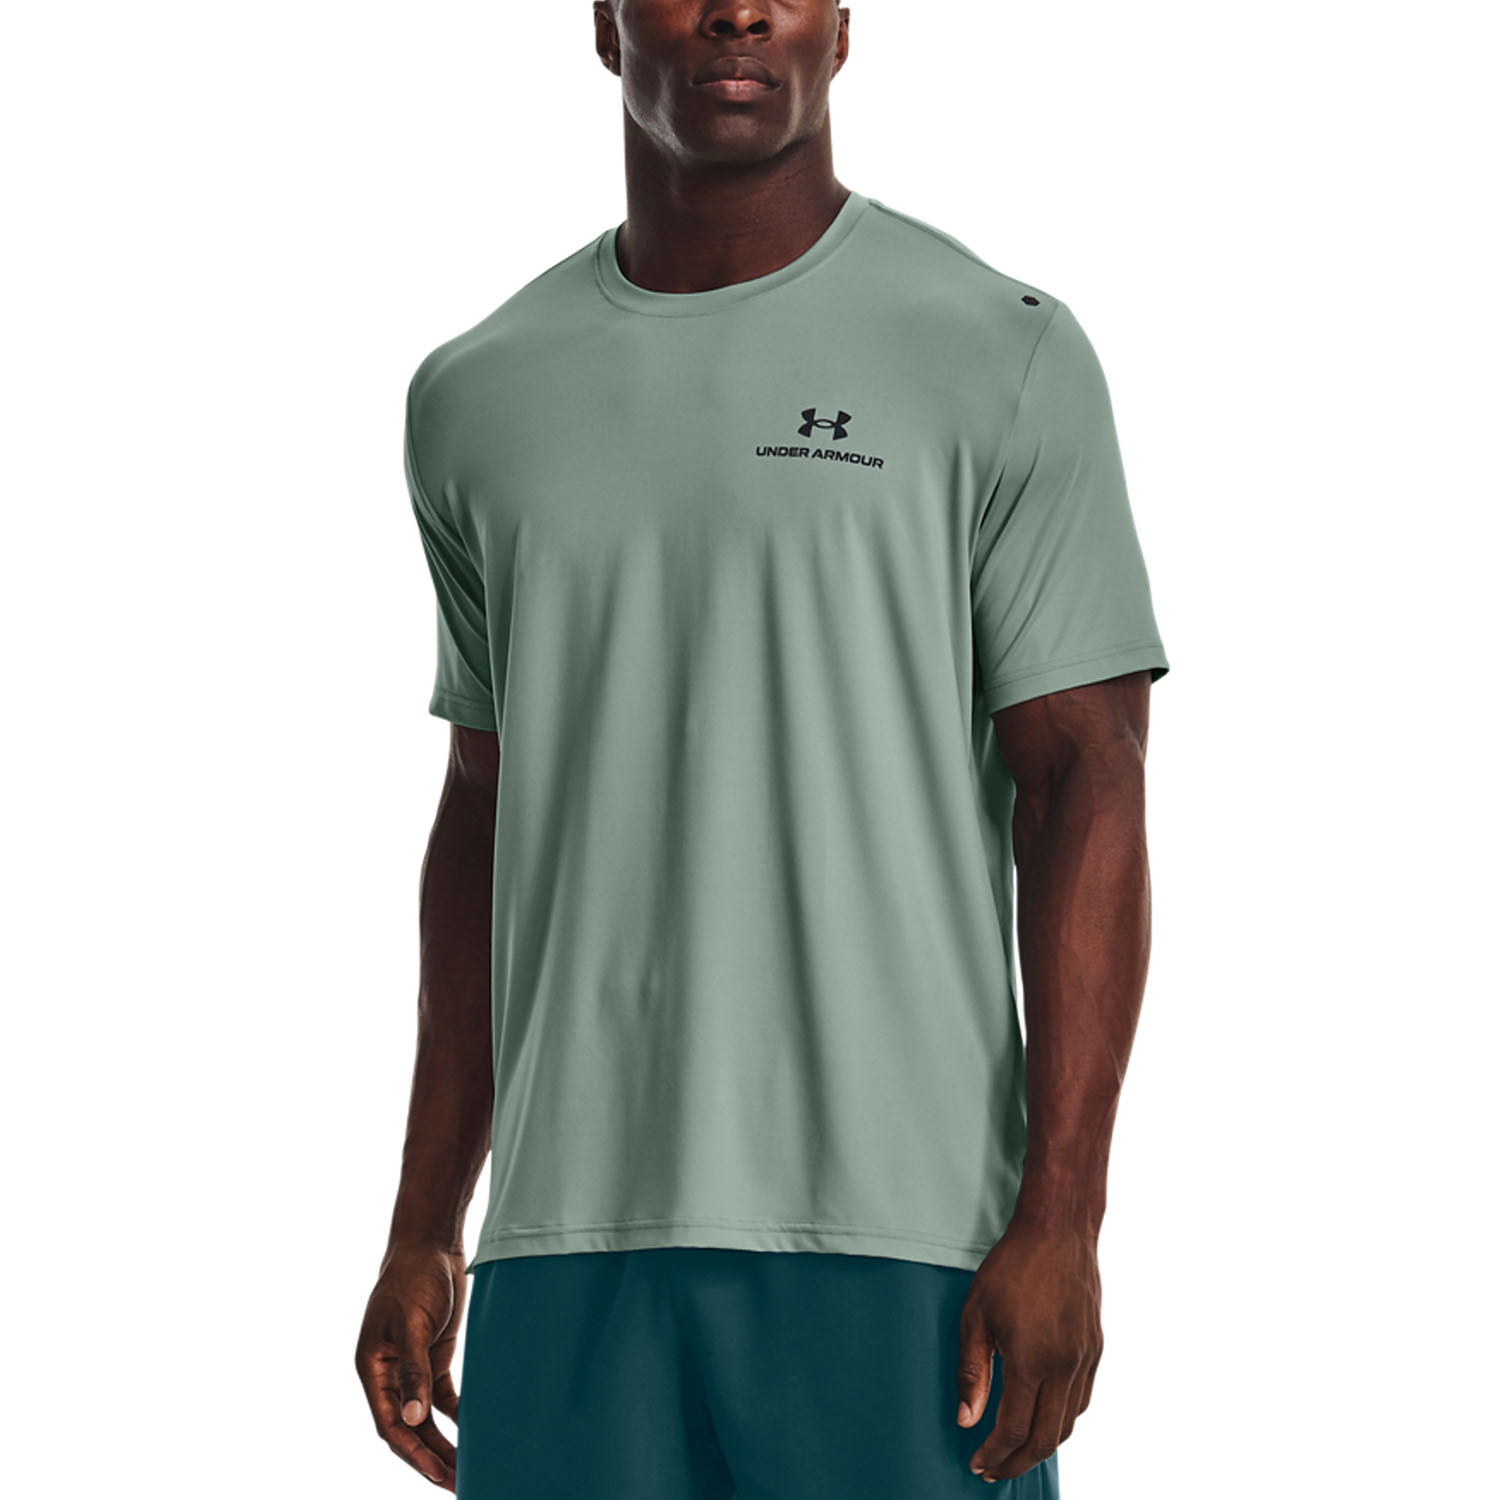 Under Armour Rush Energy Men's Tennis T-Shirt - Opal Green/Black